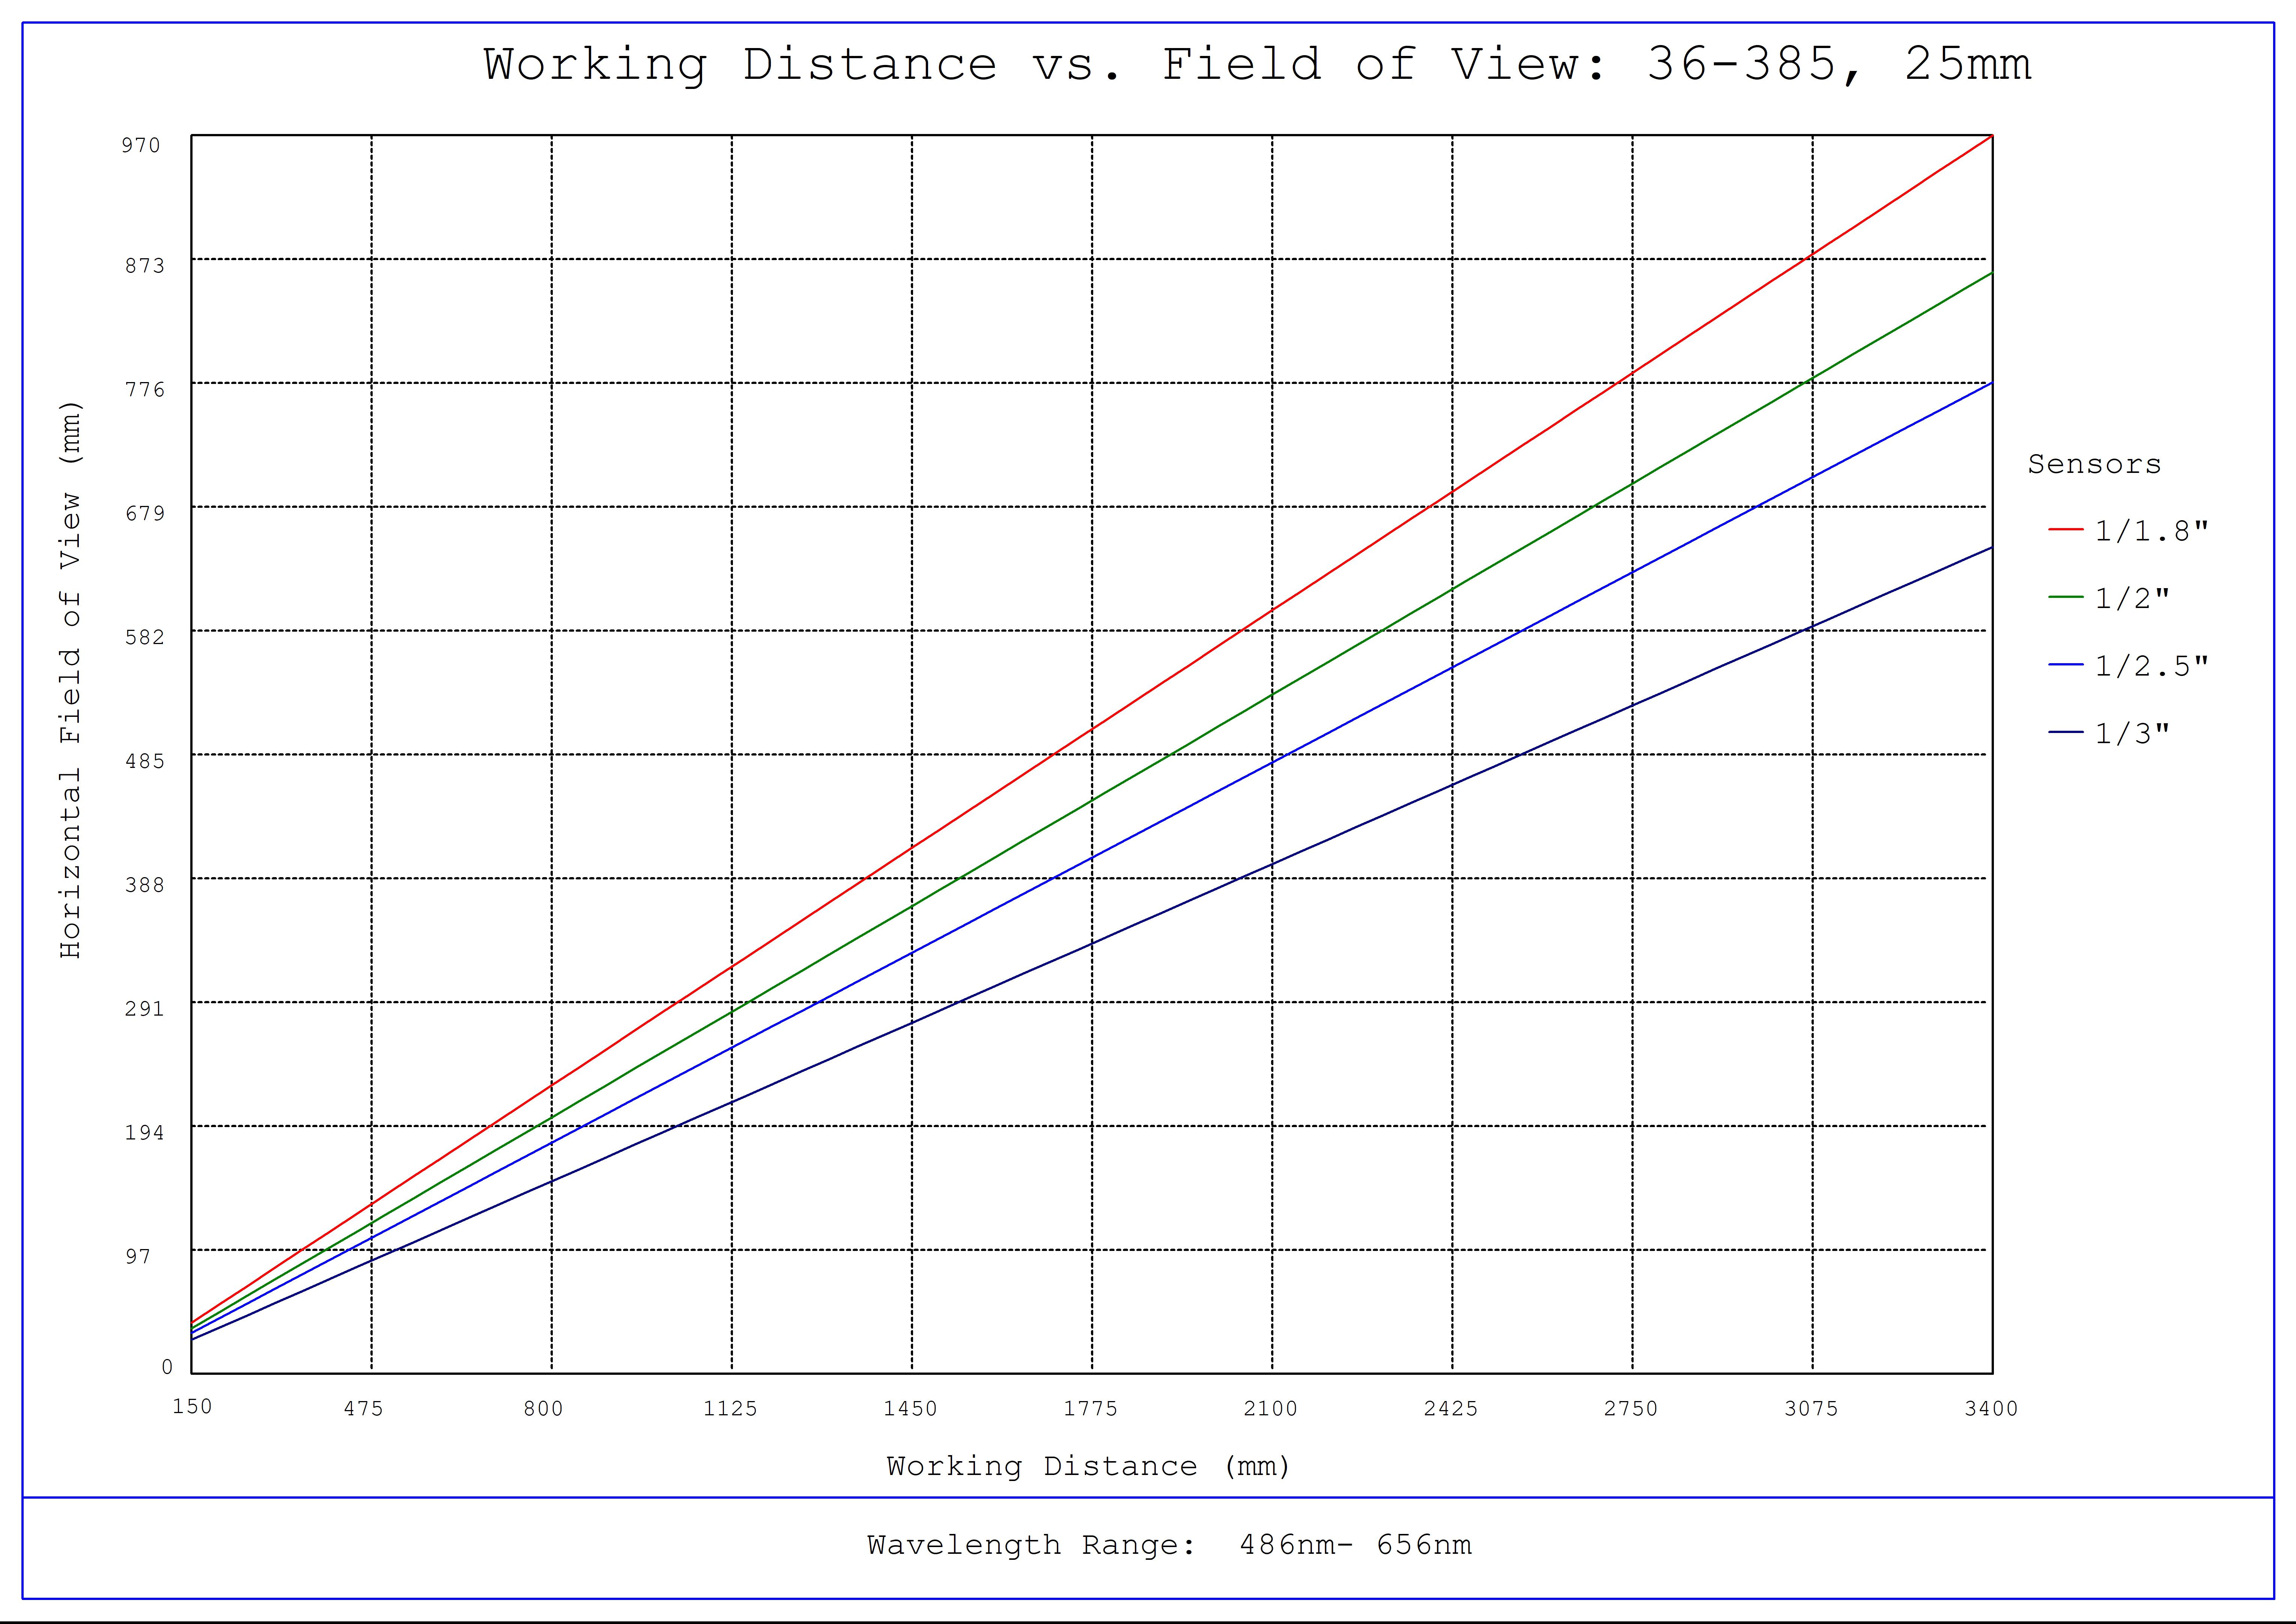 #36-385, 25mm FL f/4, Rugged Blue Series M12 Lens, Working Distance versus Field of View Plot